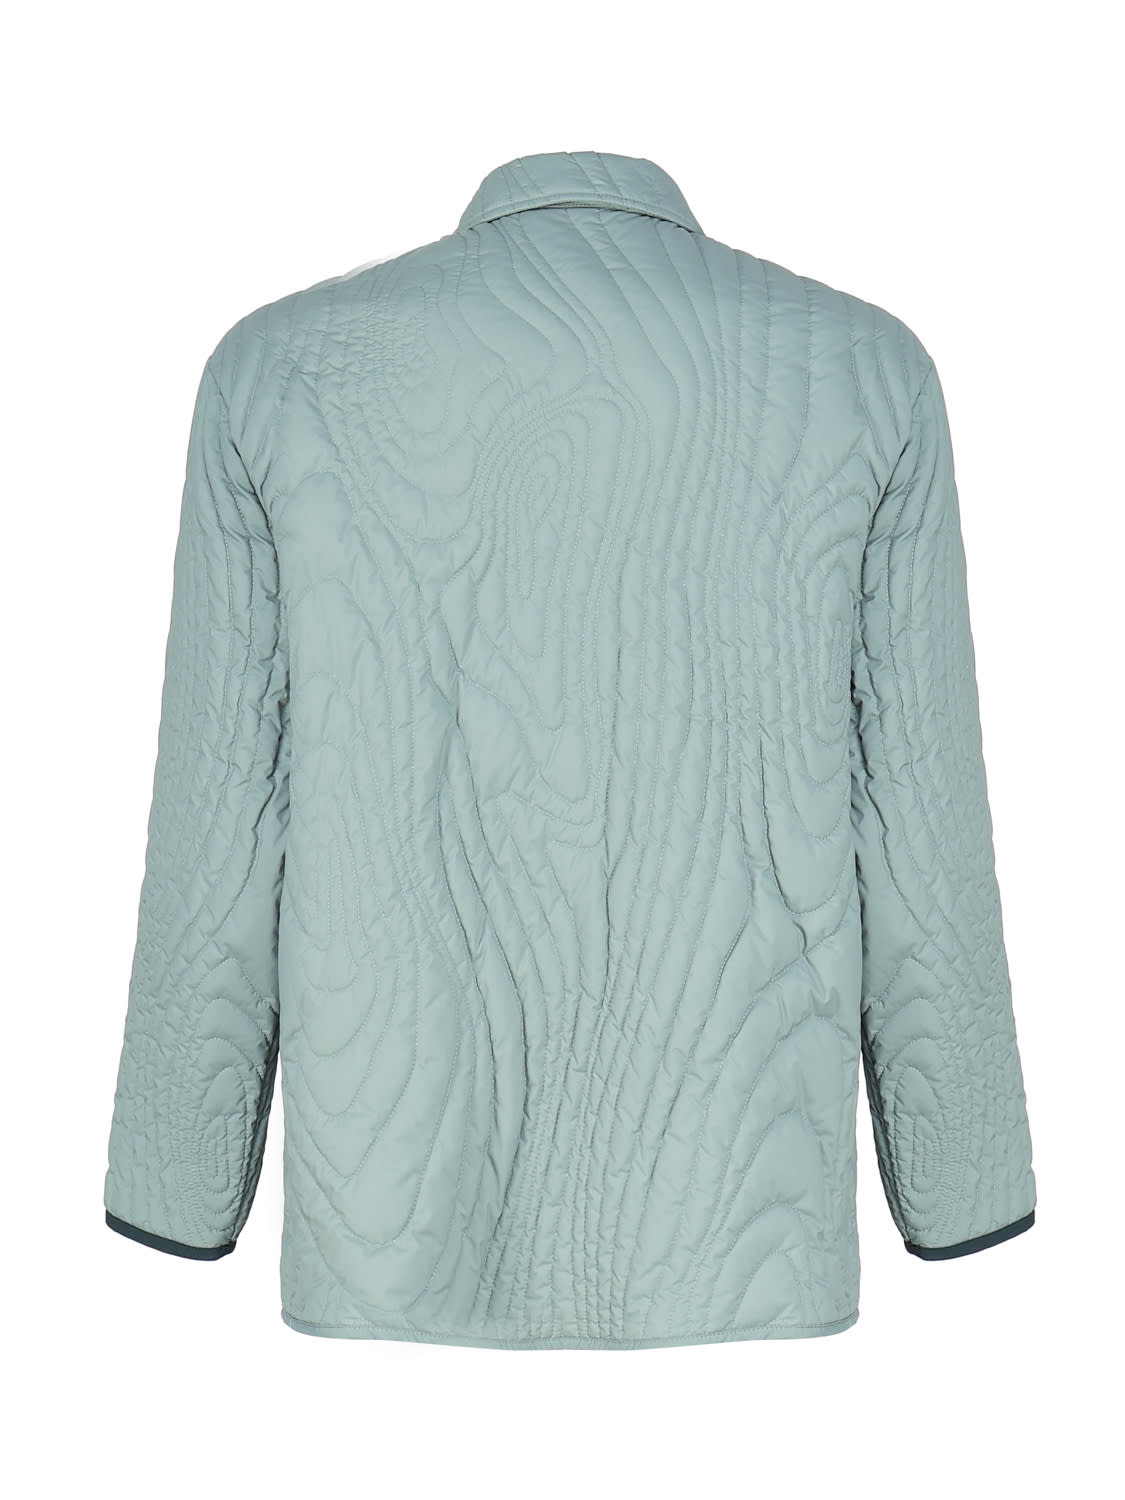 Shop Moncler Genius Moncler X Salehe Bembury Jacket In Dusty Light Blue